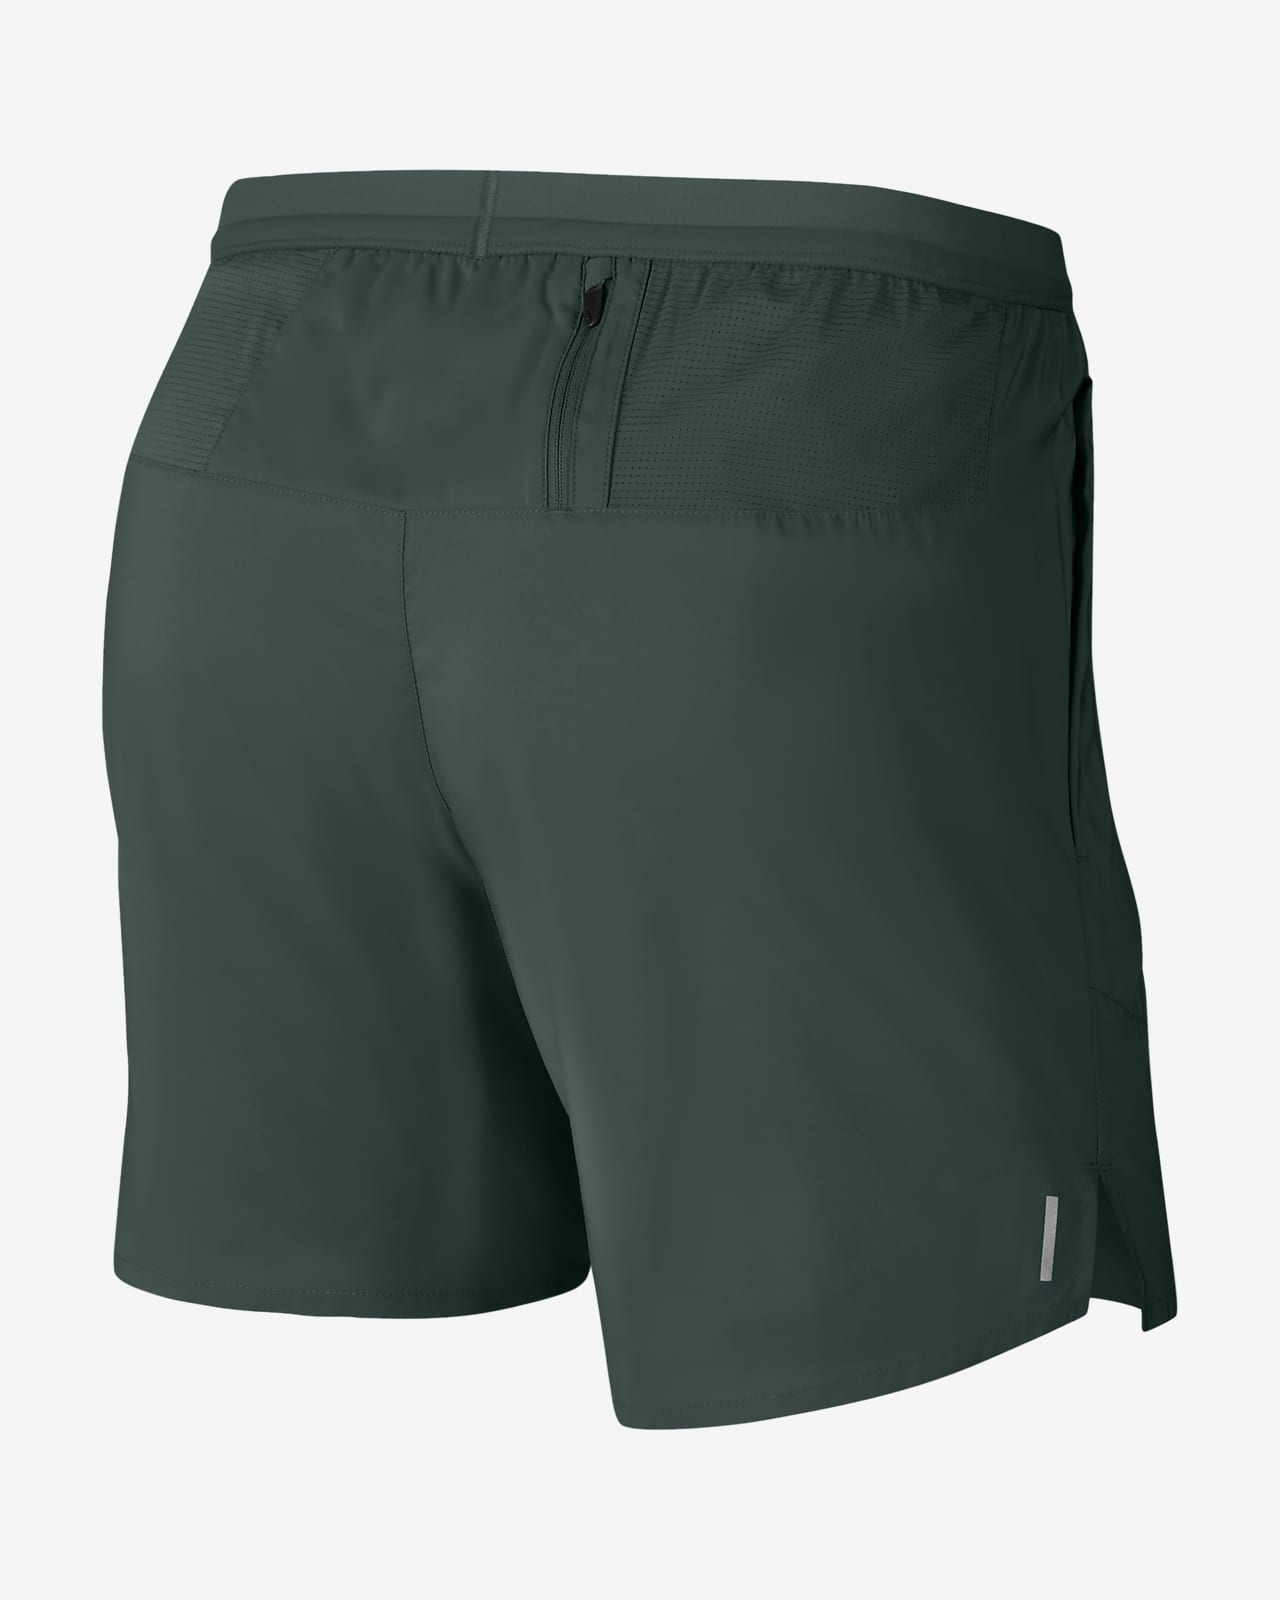 nike running shorts mens sale